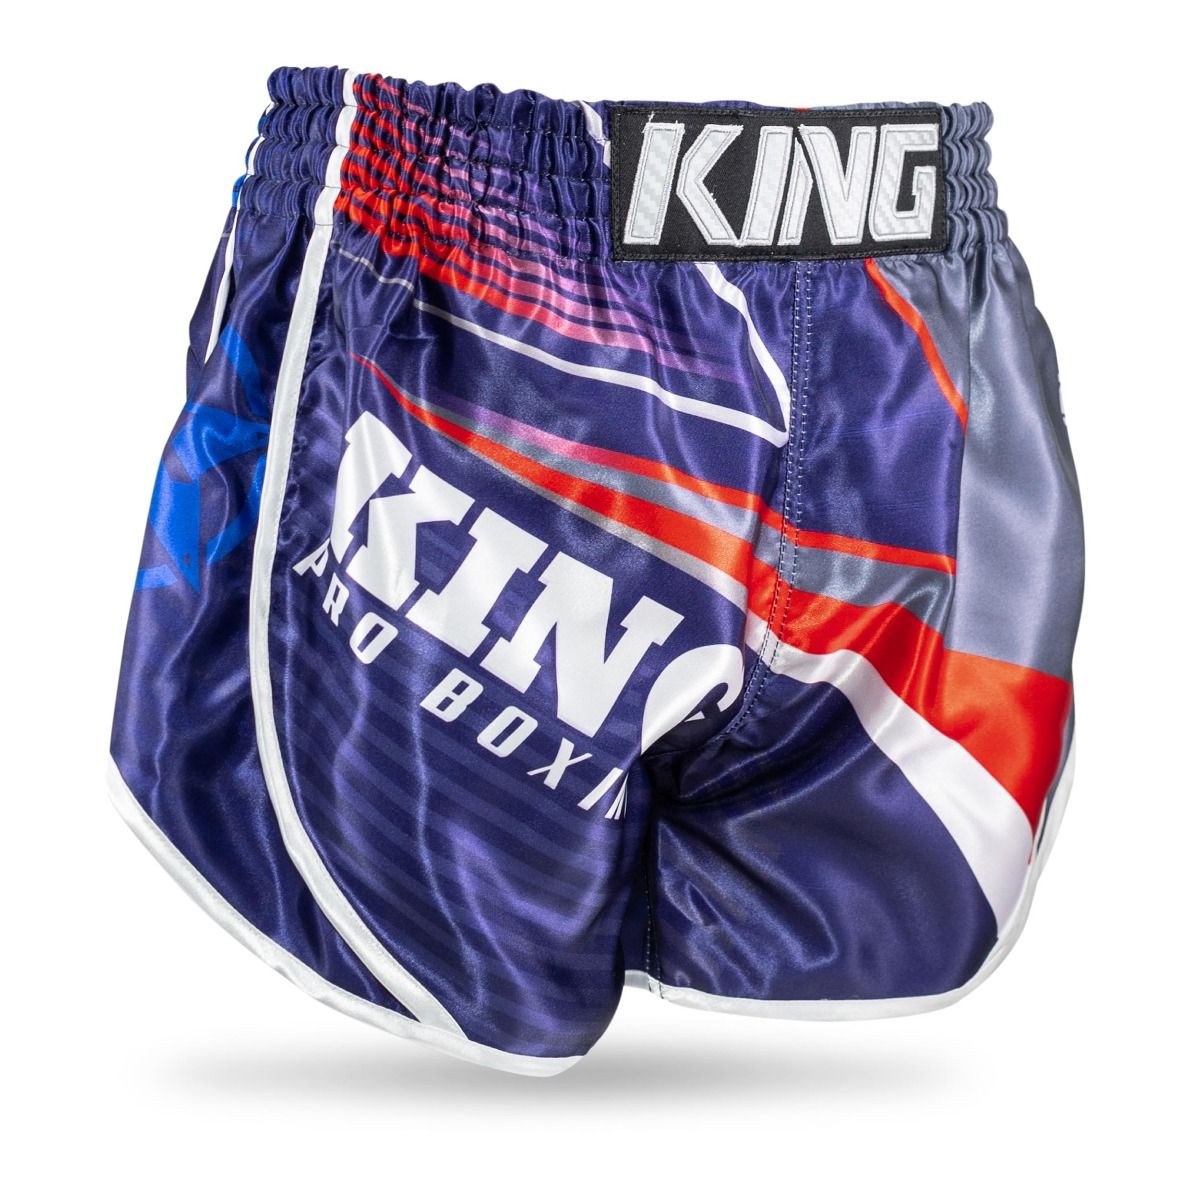 King Pro Boxing - fightshorts - korte broek - STRIKER 2 - rood - grijs - blauw